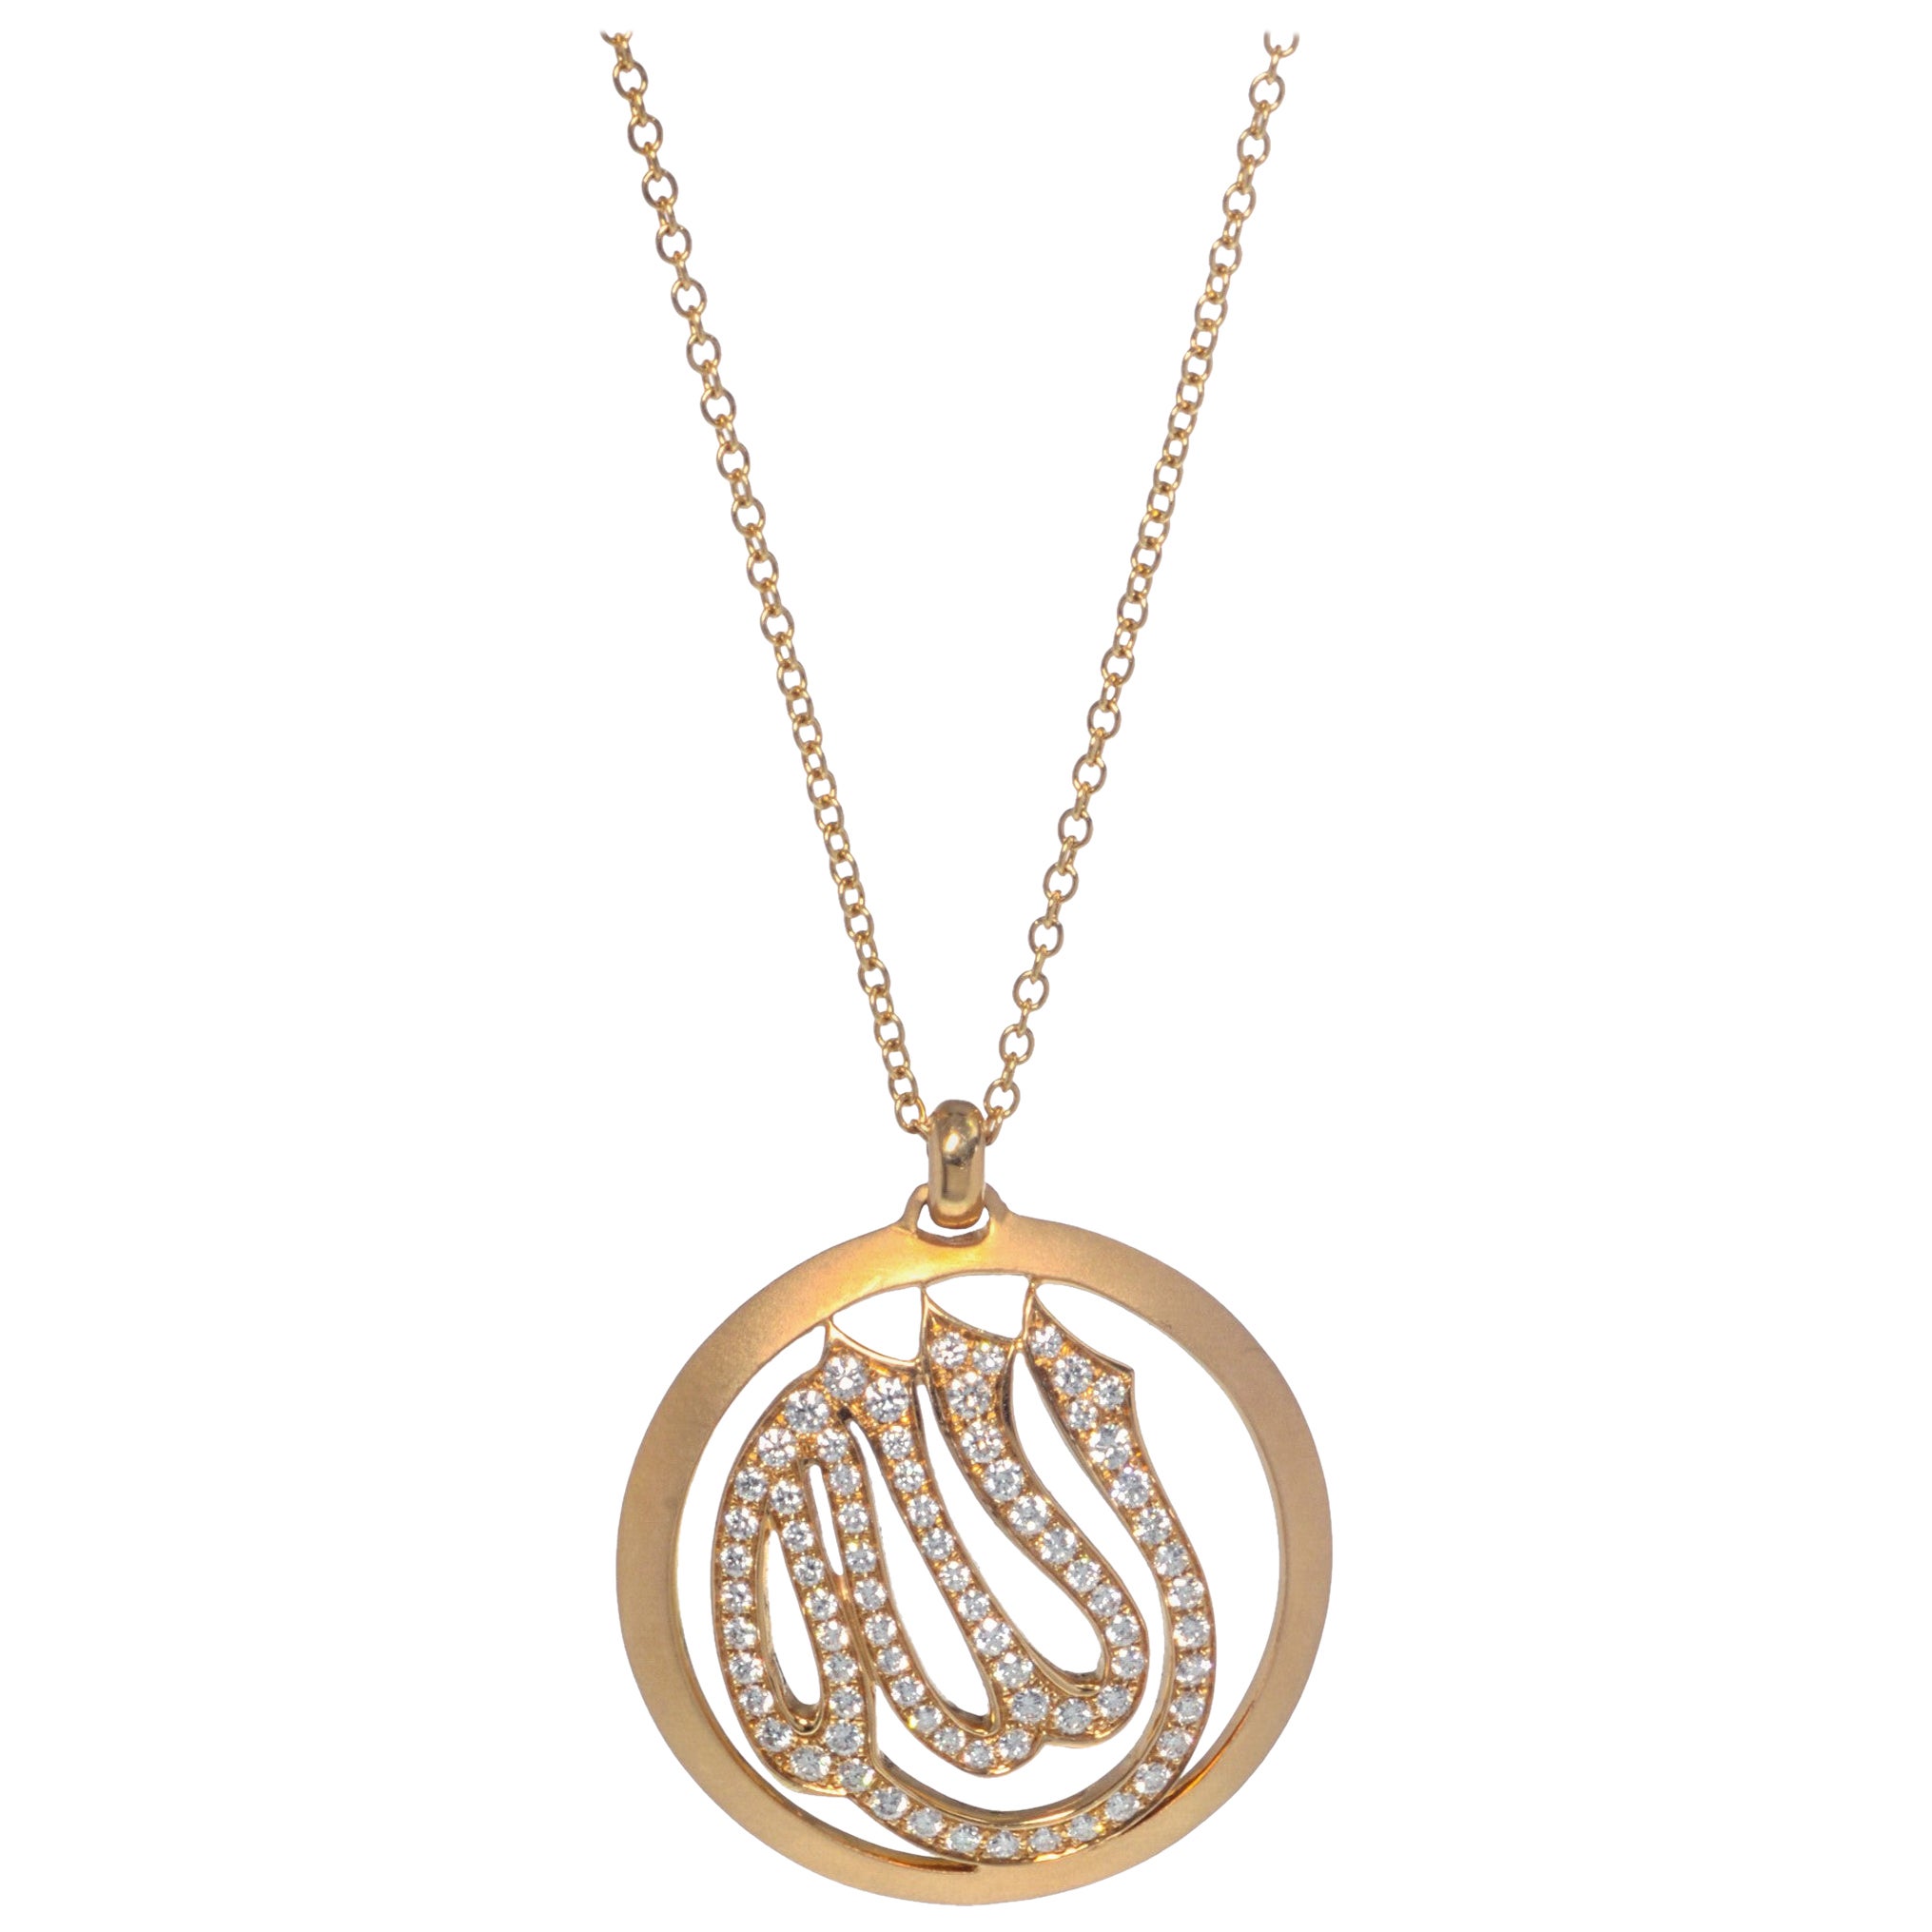 Luca Carati Collier pendentif symbole arabe en or jaune 18 carats avec diamants 0,95 carat poids total